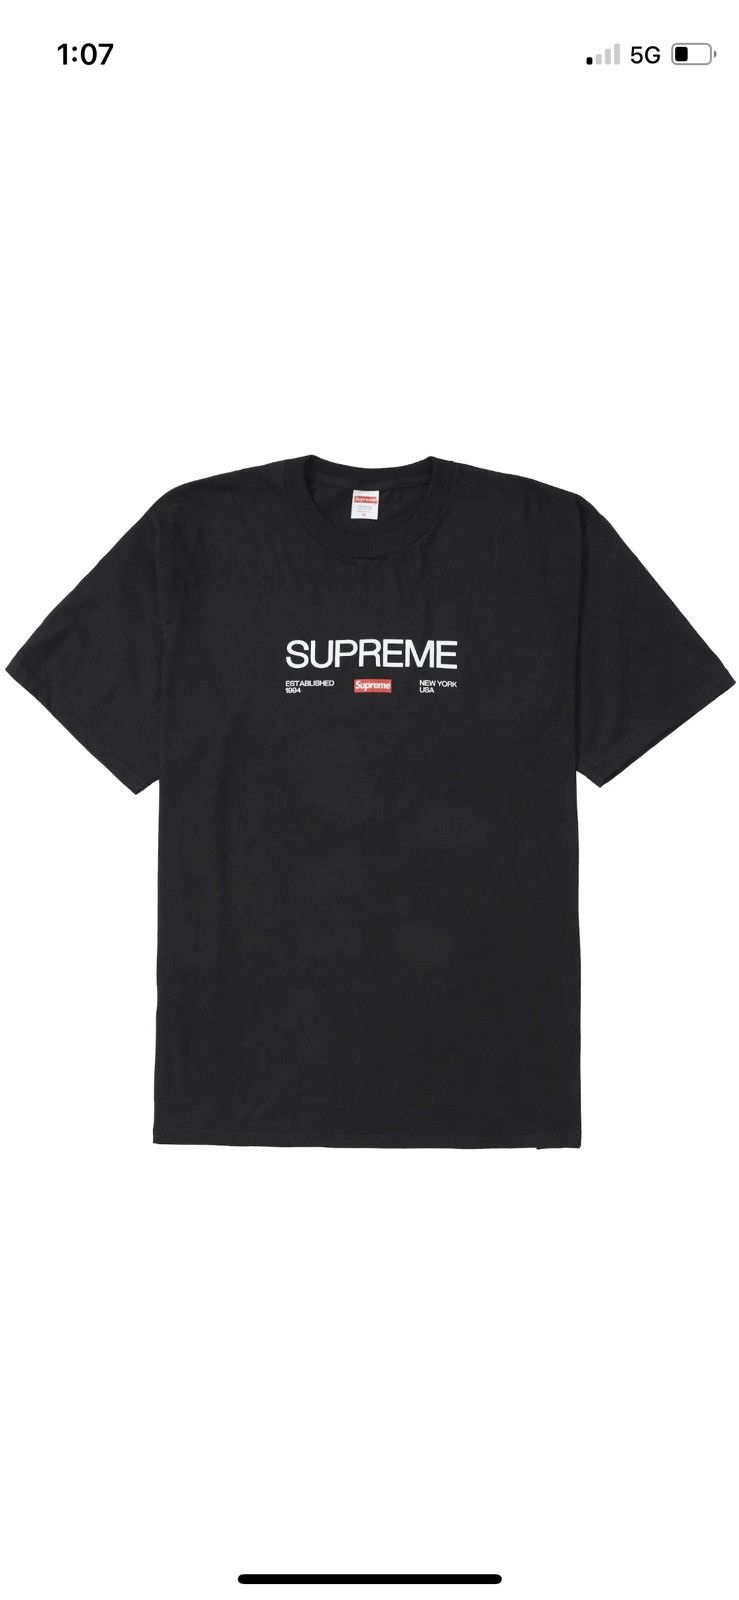 Supreme Est. 1994 Tee Black